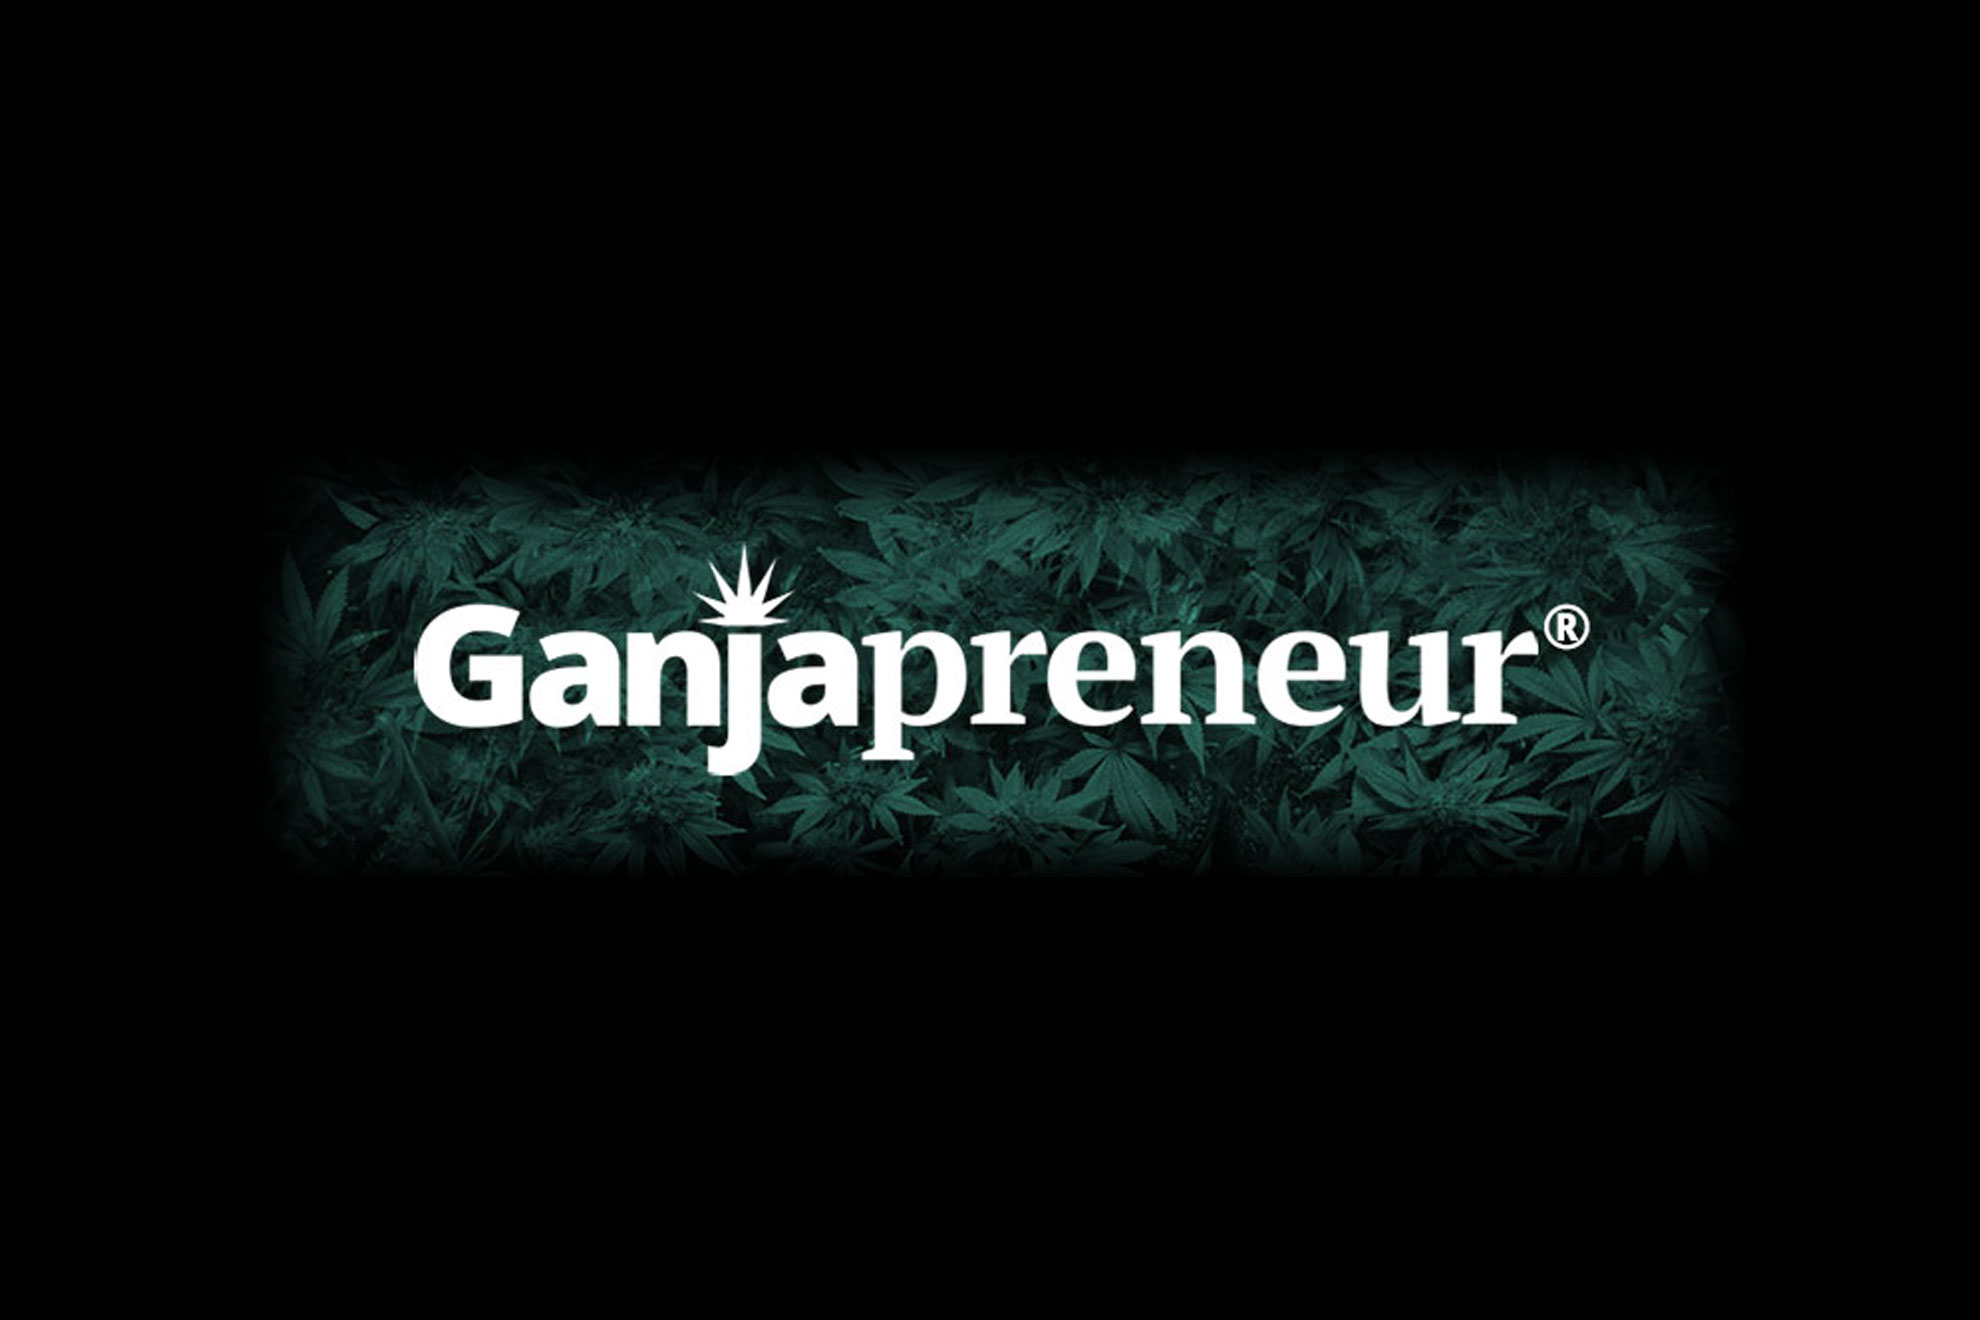 Are You The Next Ganjapreneur